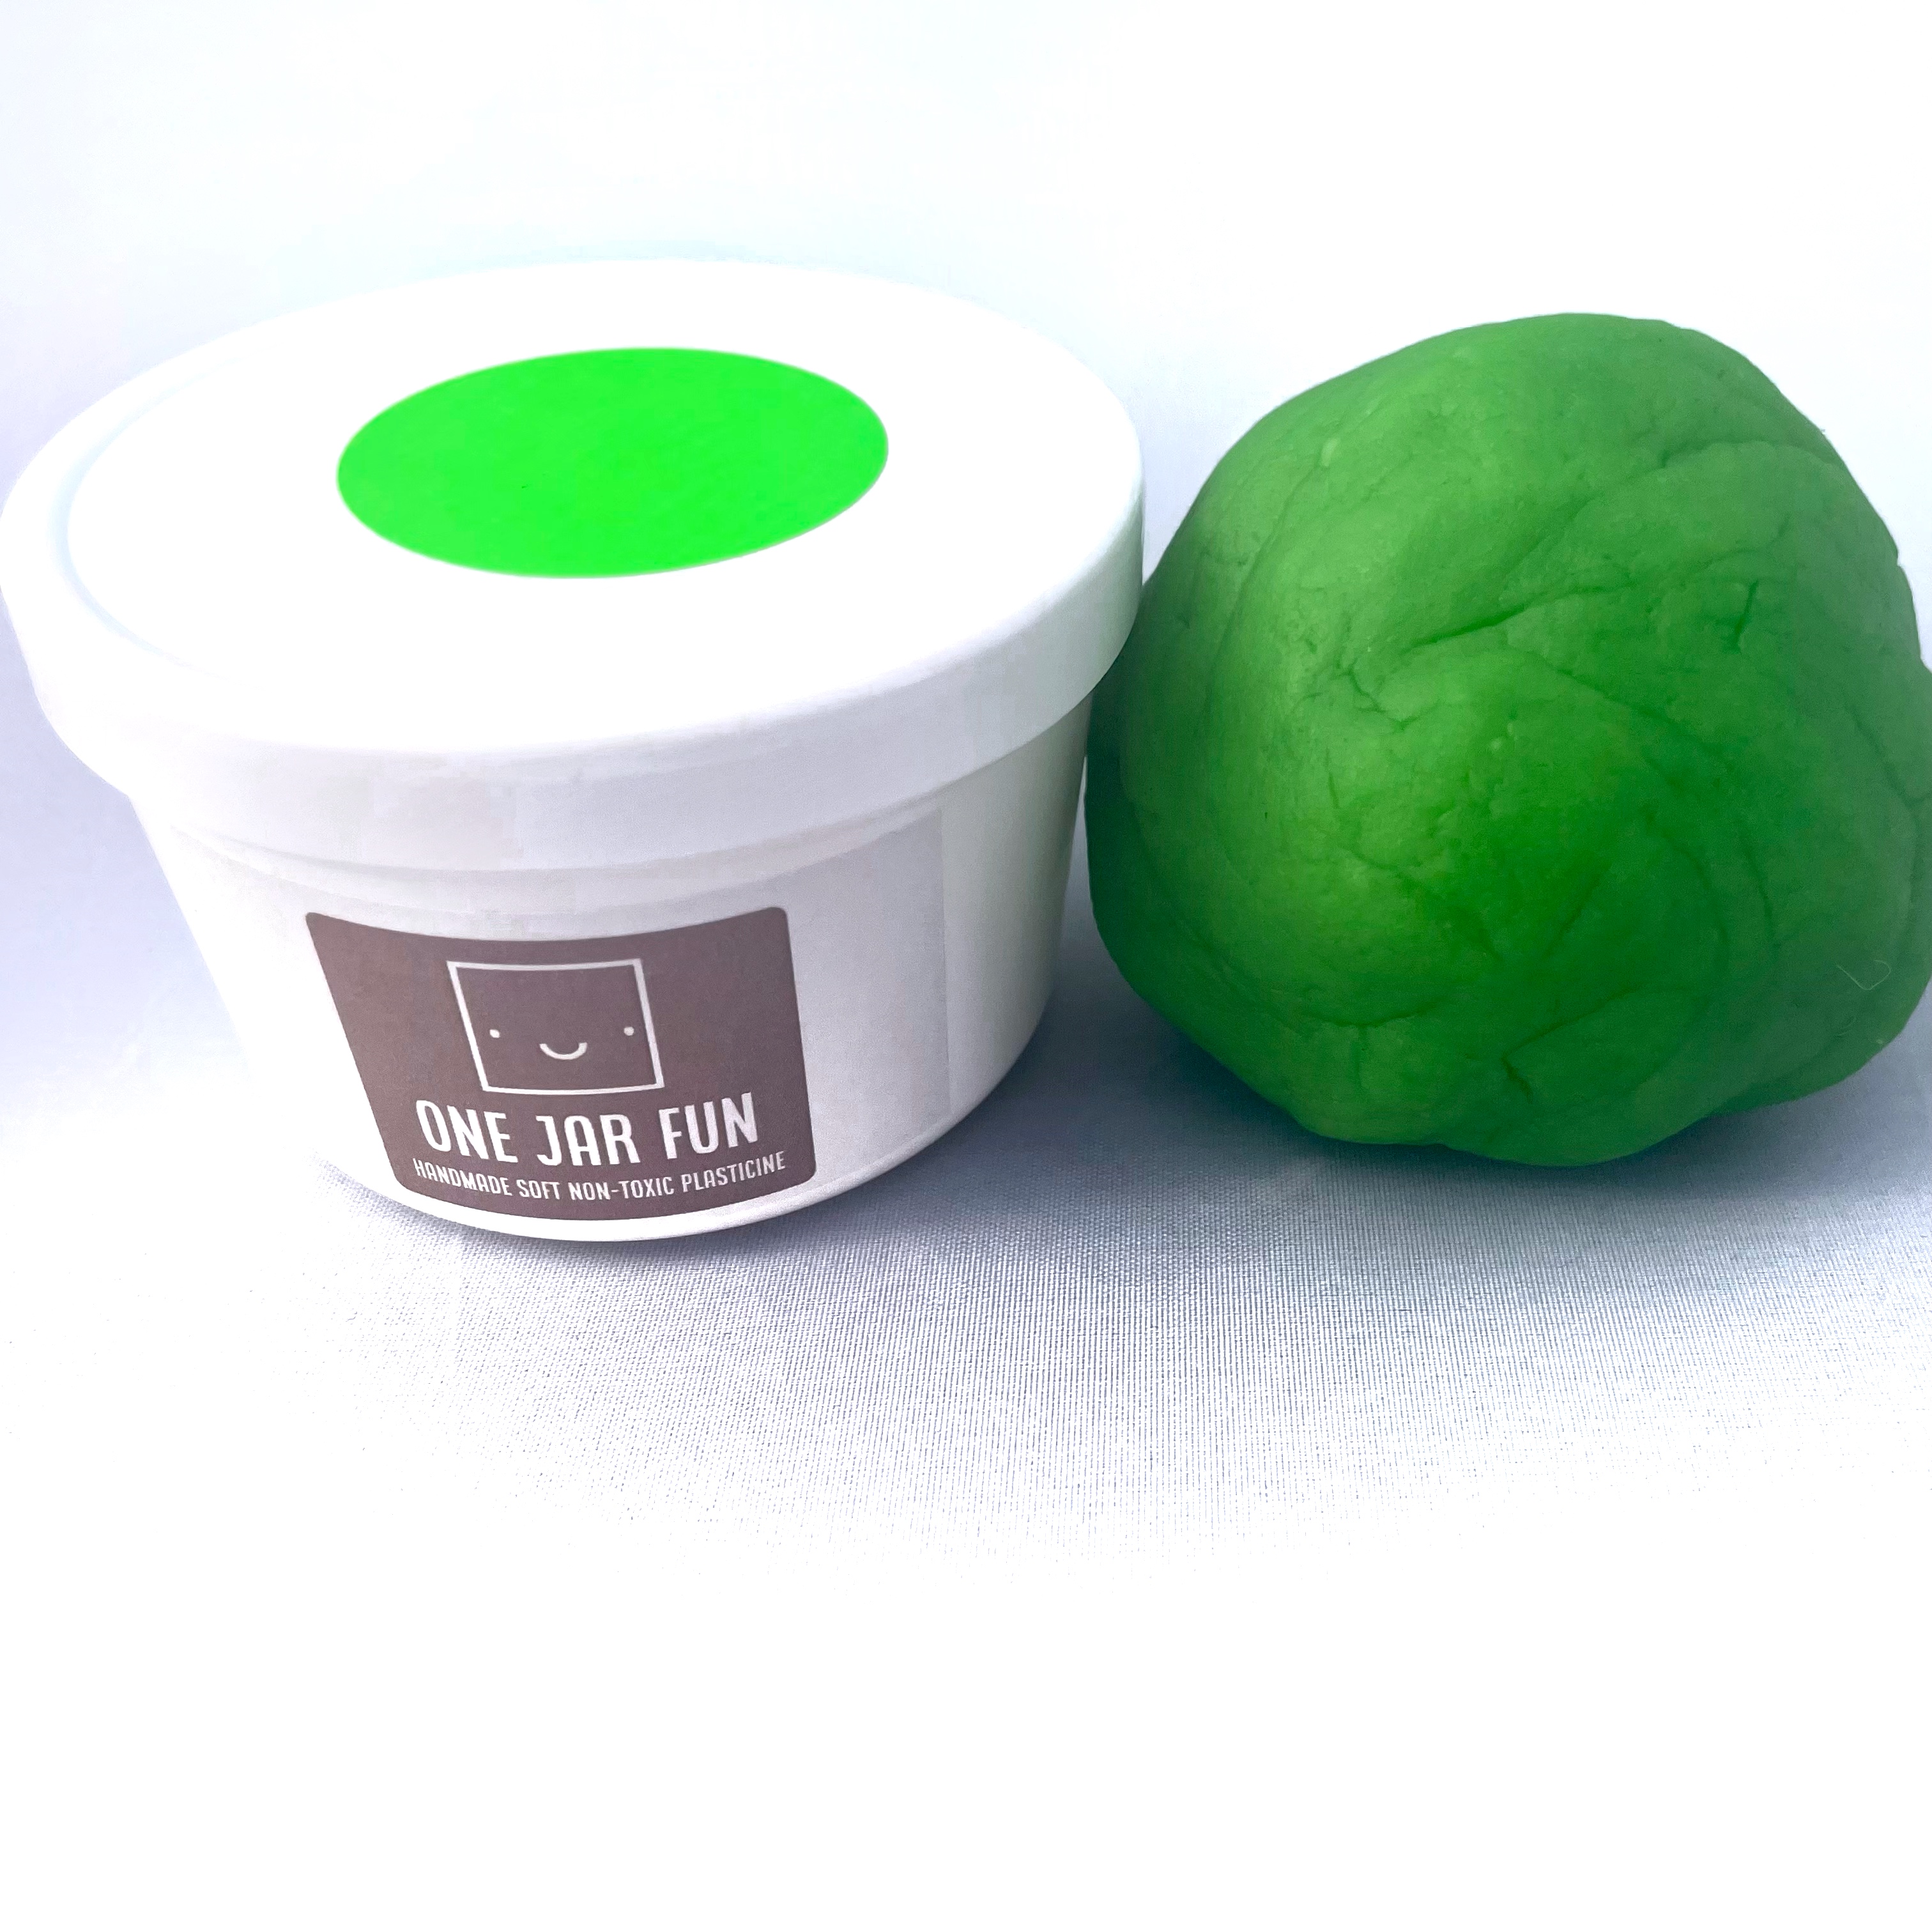 One Jar Fun kézműves lágy gyurma, zöld, 150g